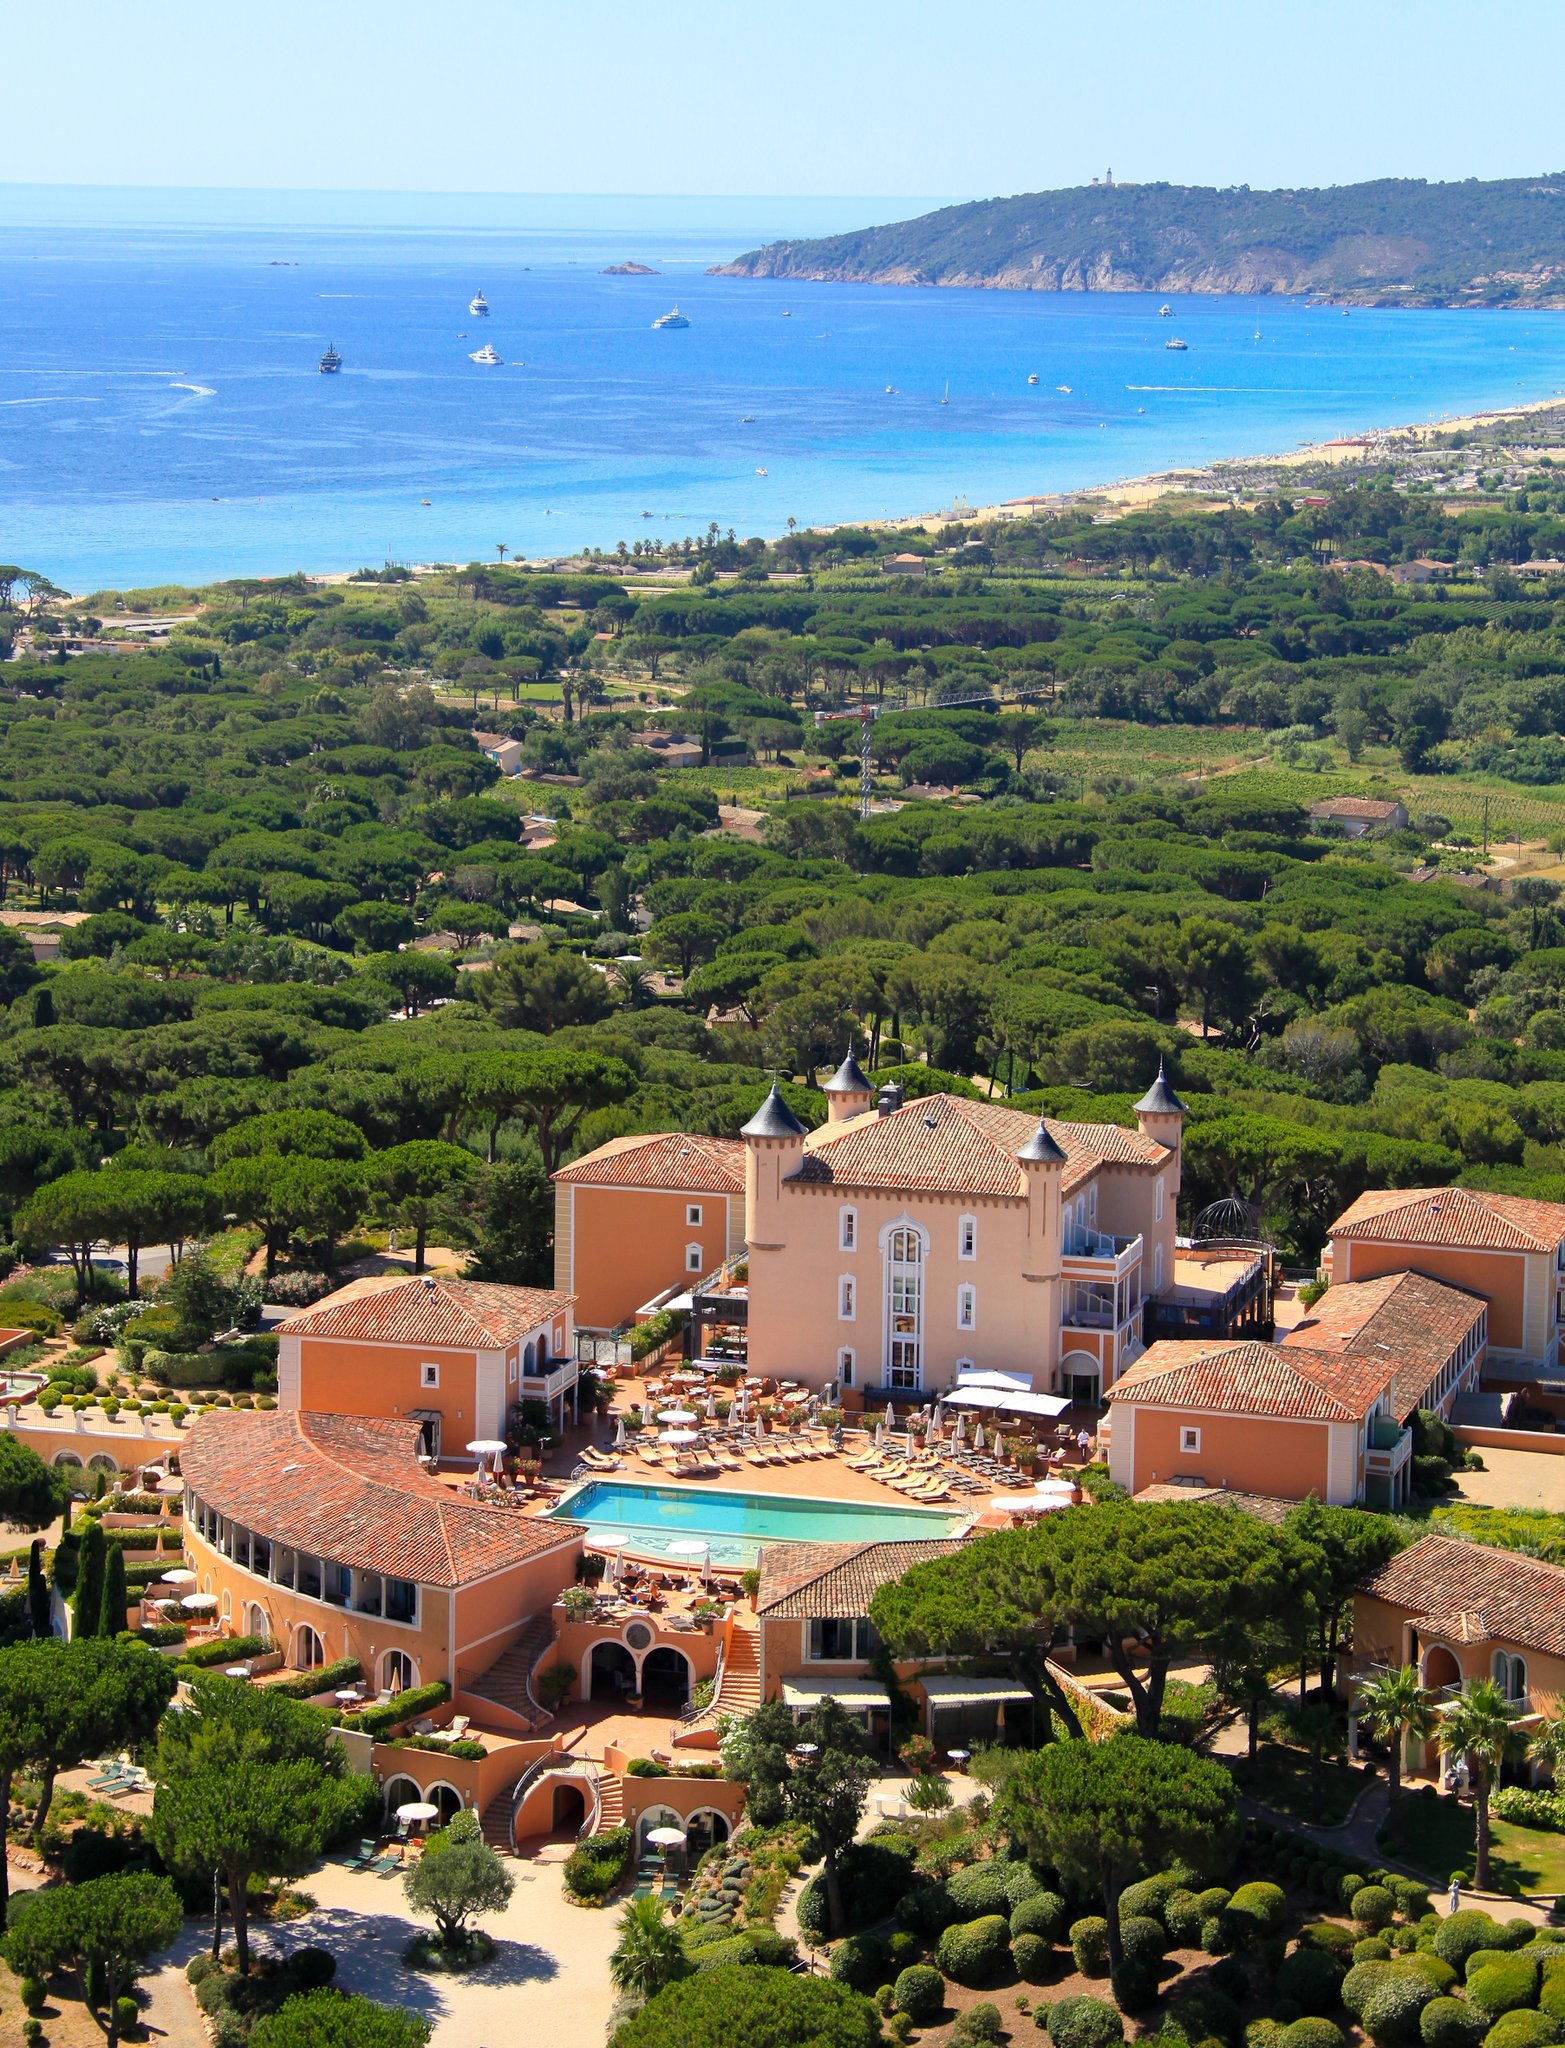 Chateau Hotel de la Messardiere- Deluxe St Tropez, France Hotels- GDS ...